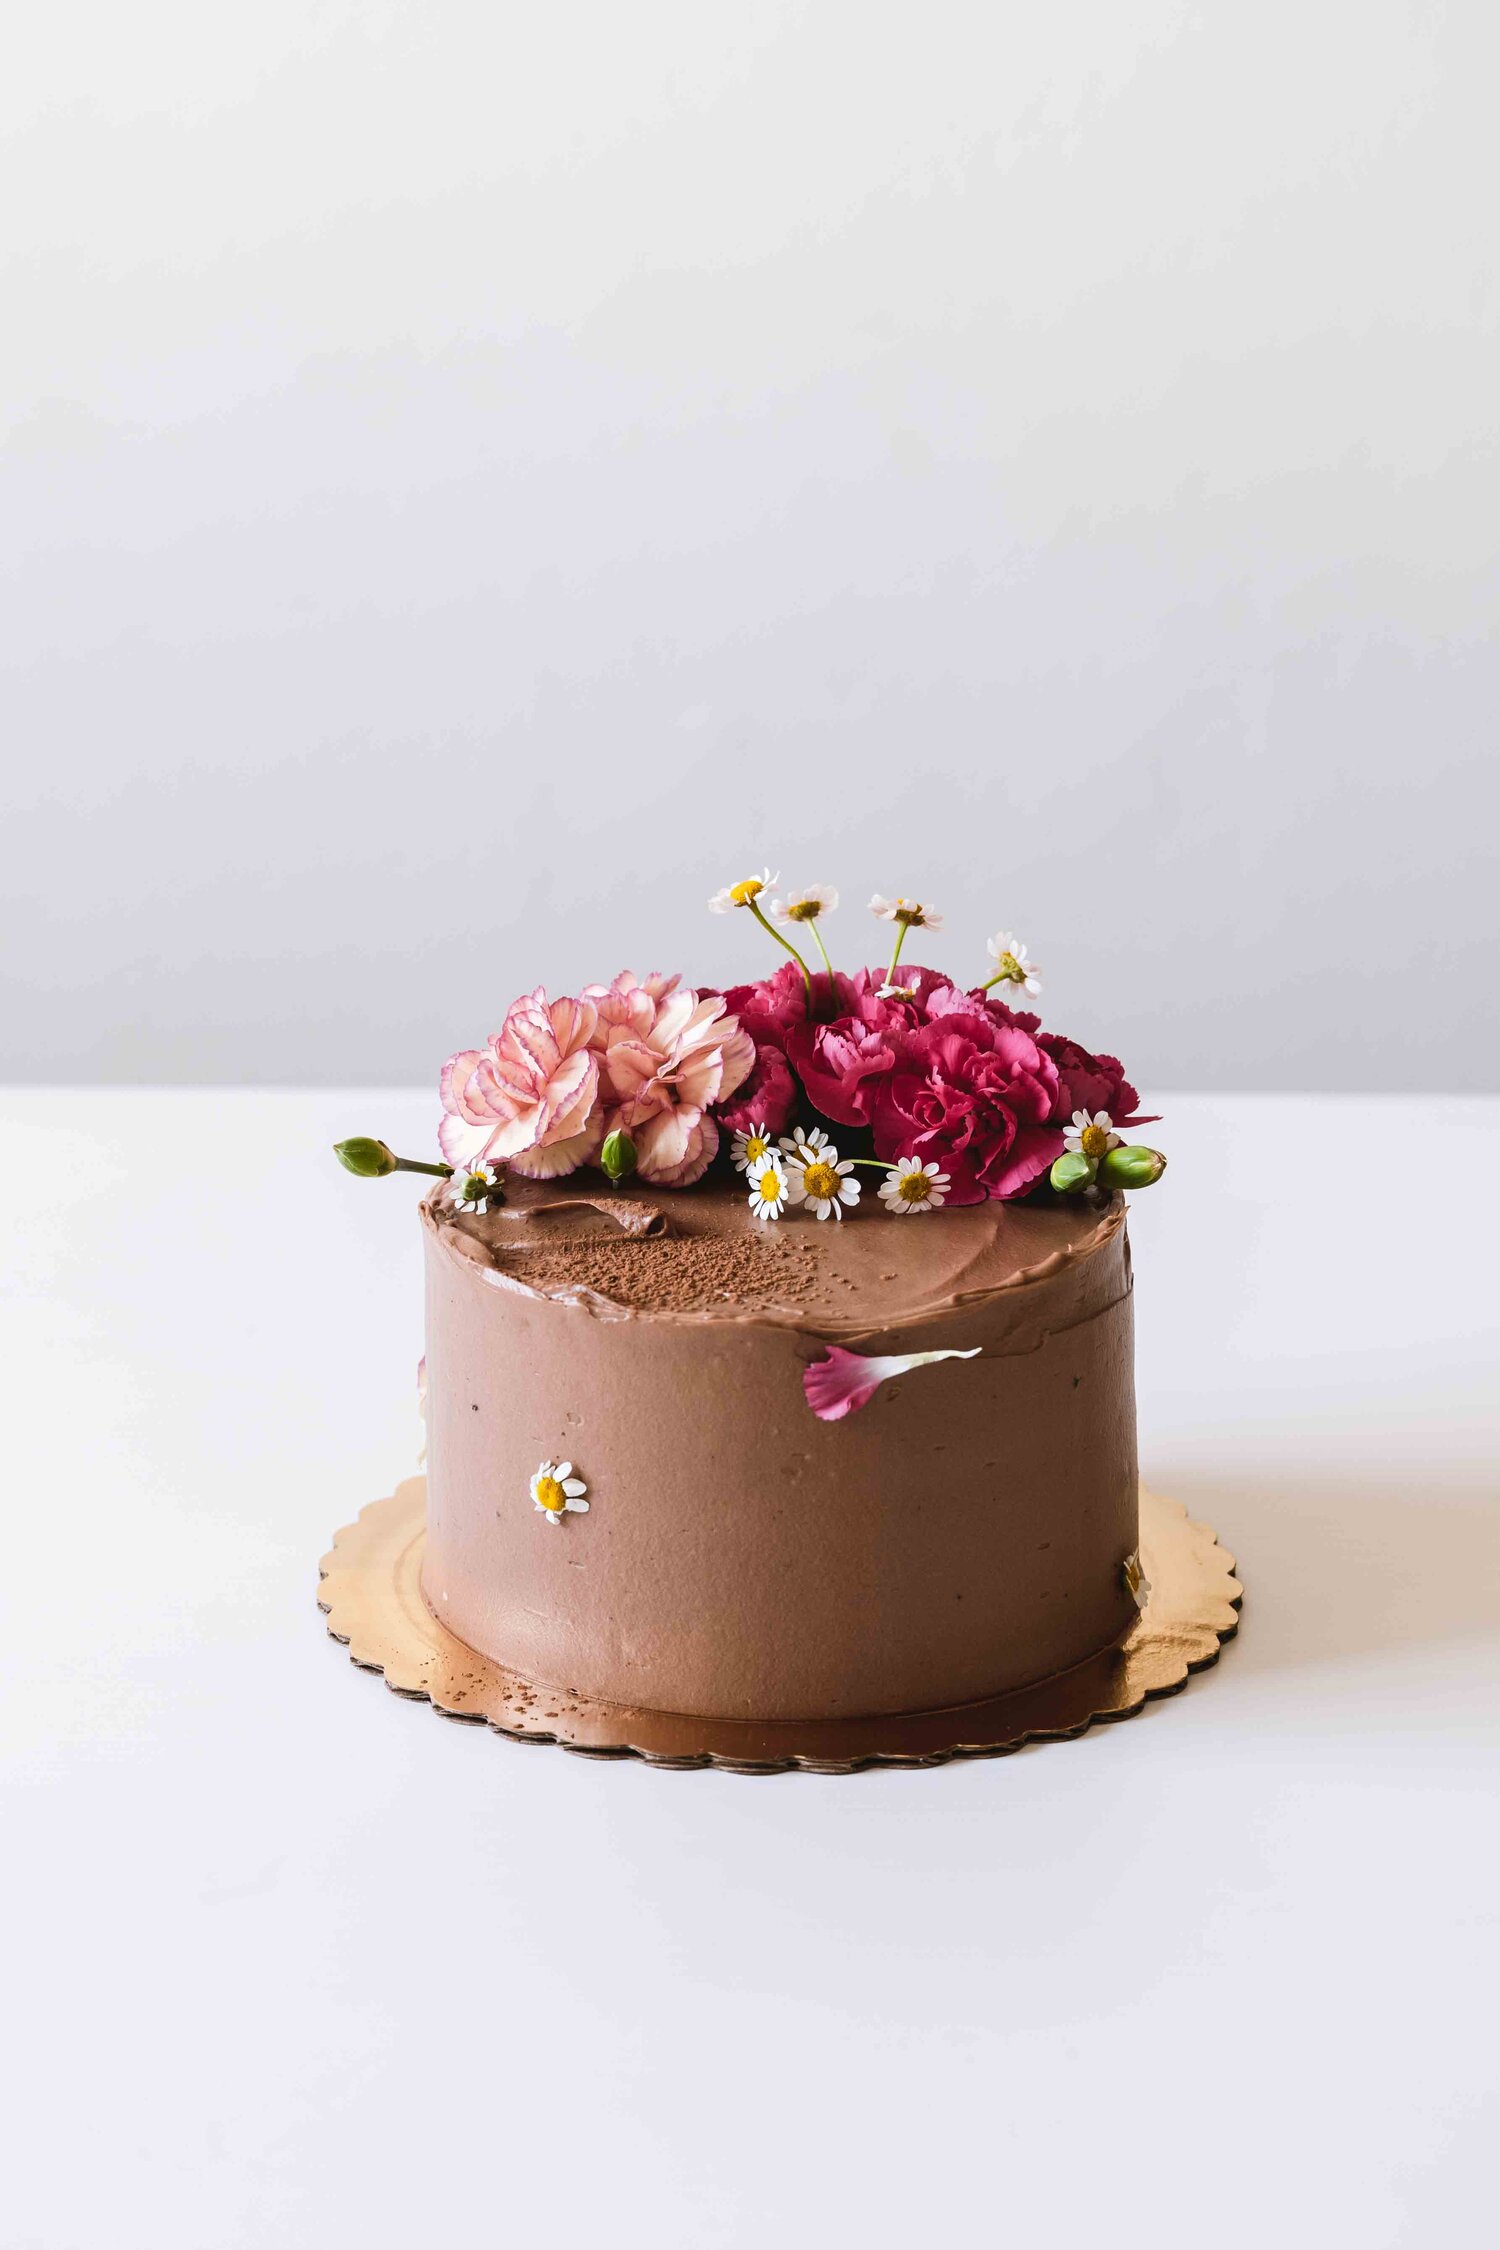 LakeSide Chocolate Rocks Edible Cake & Cupcake Decoration - 8oz